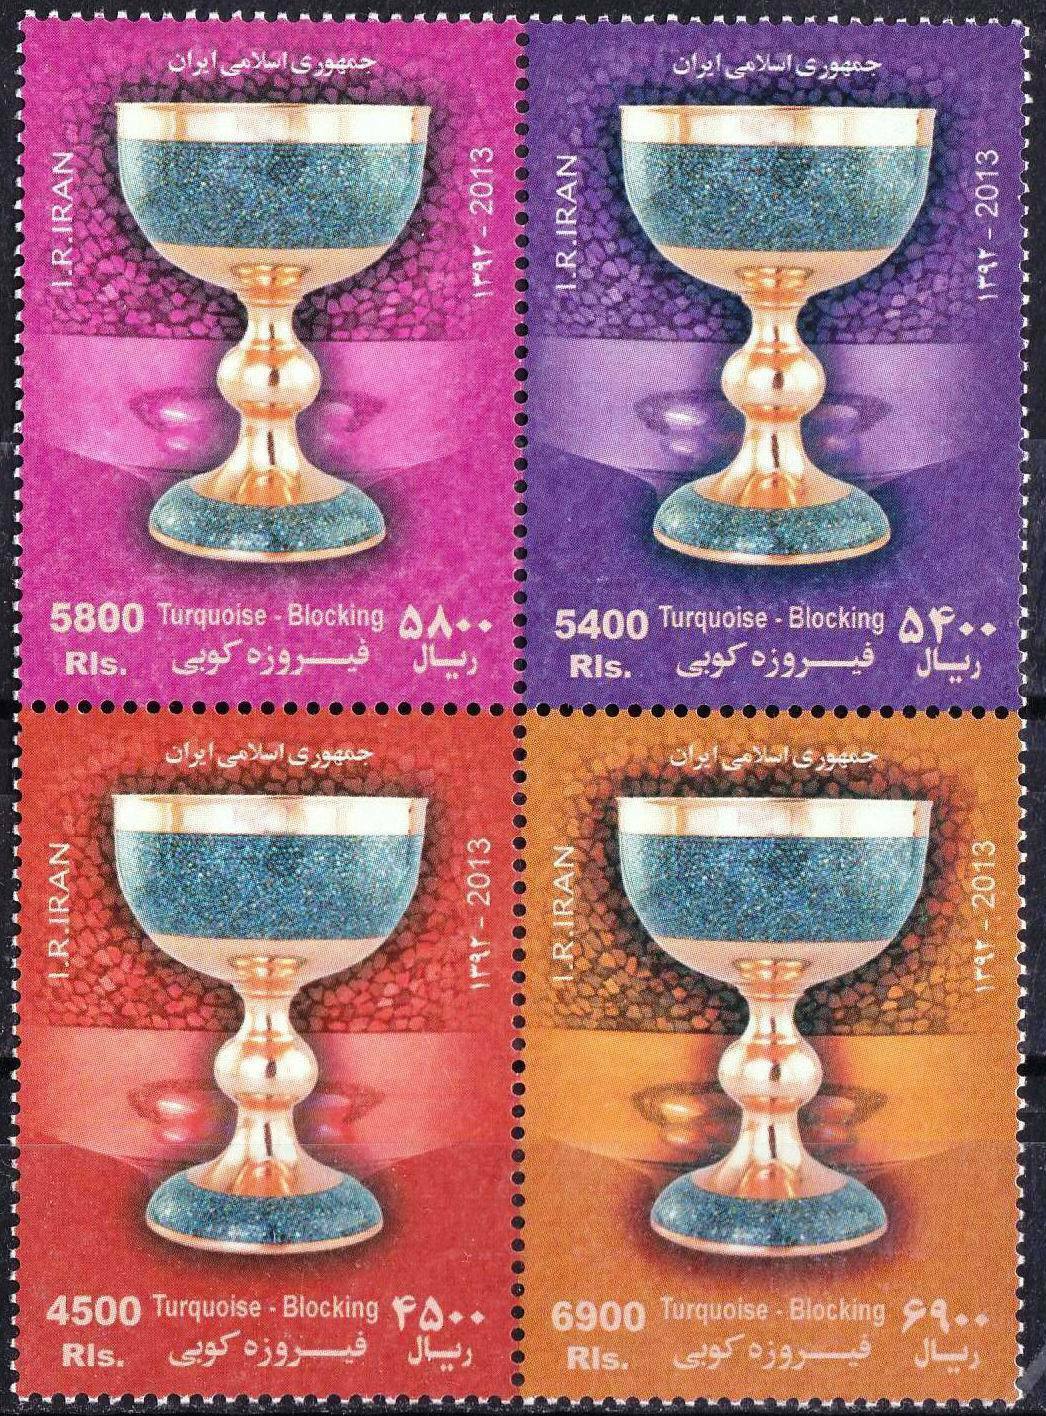 Iran 1965 Stamps State Visit by Saudi Arabia's King Faisal Reza - Click Image to Close